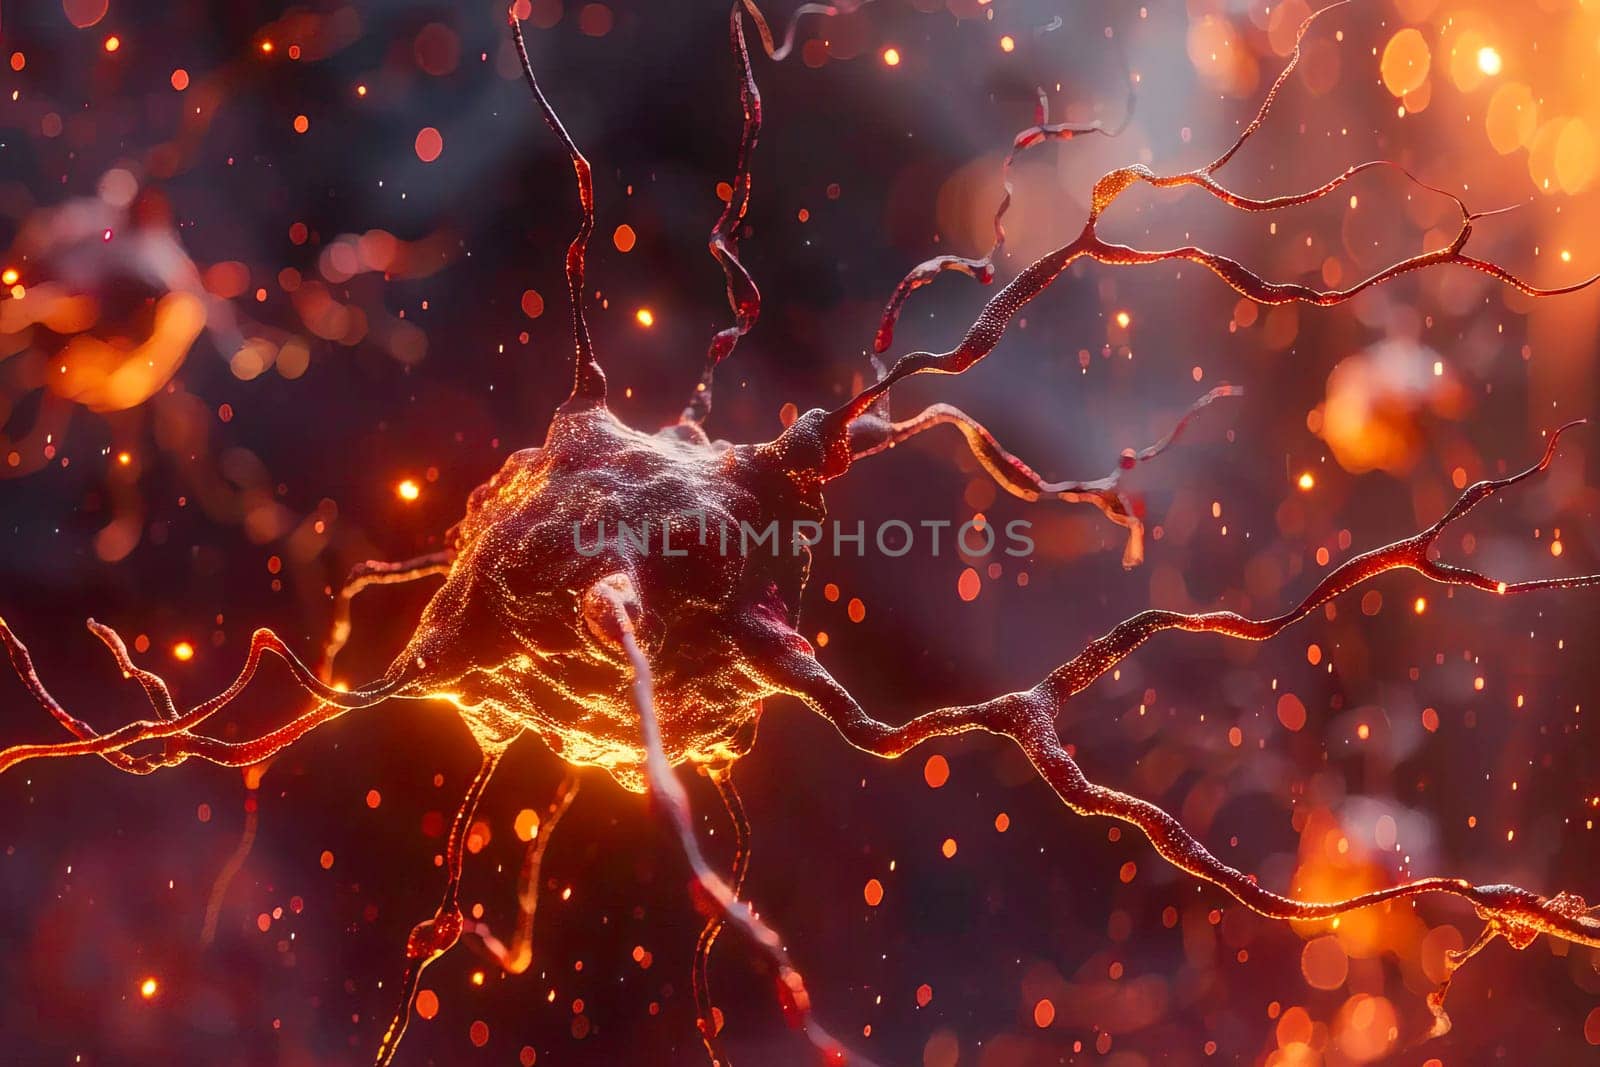 Neurons firing in the human brain by vladimka